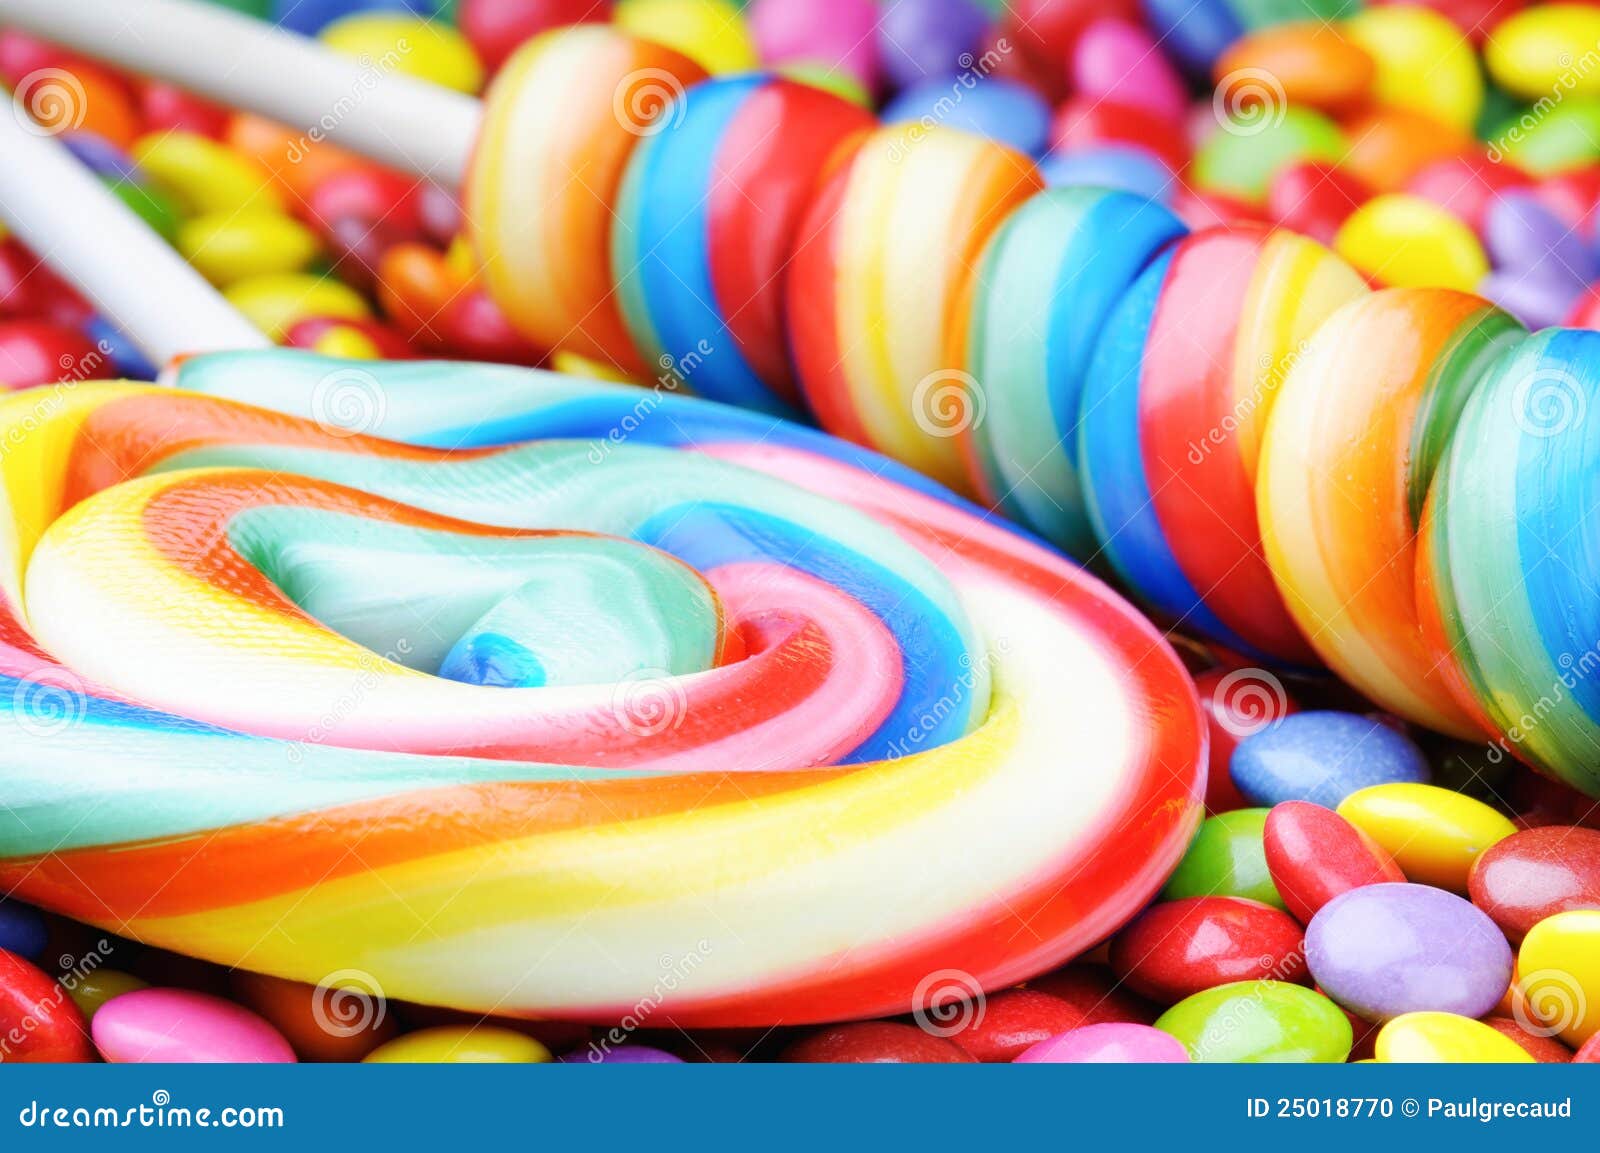 Striped lollipops stock photo. Image of childish, holiday - 25018770